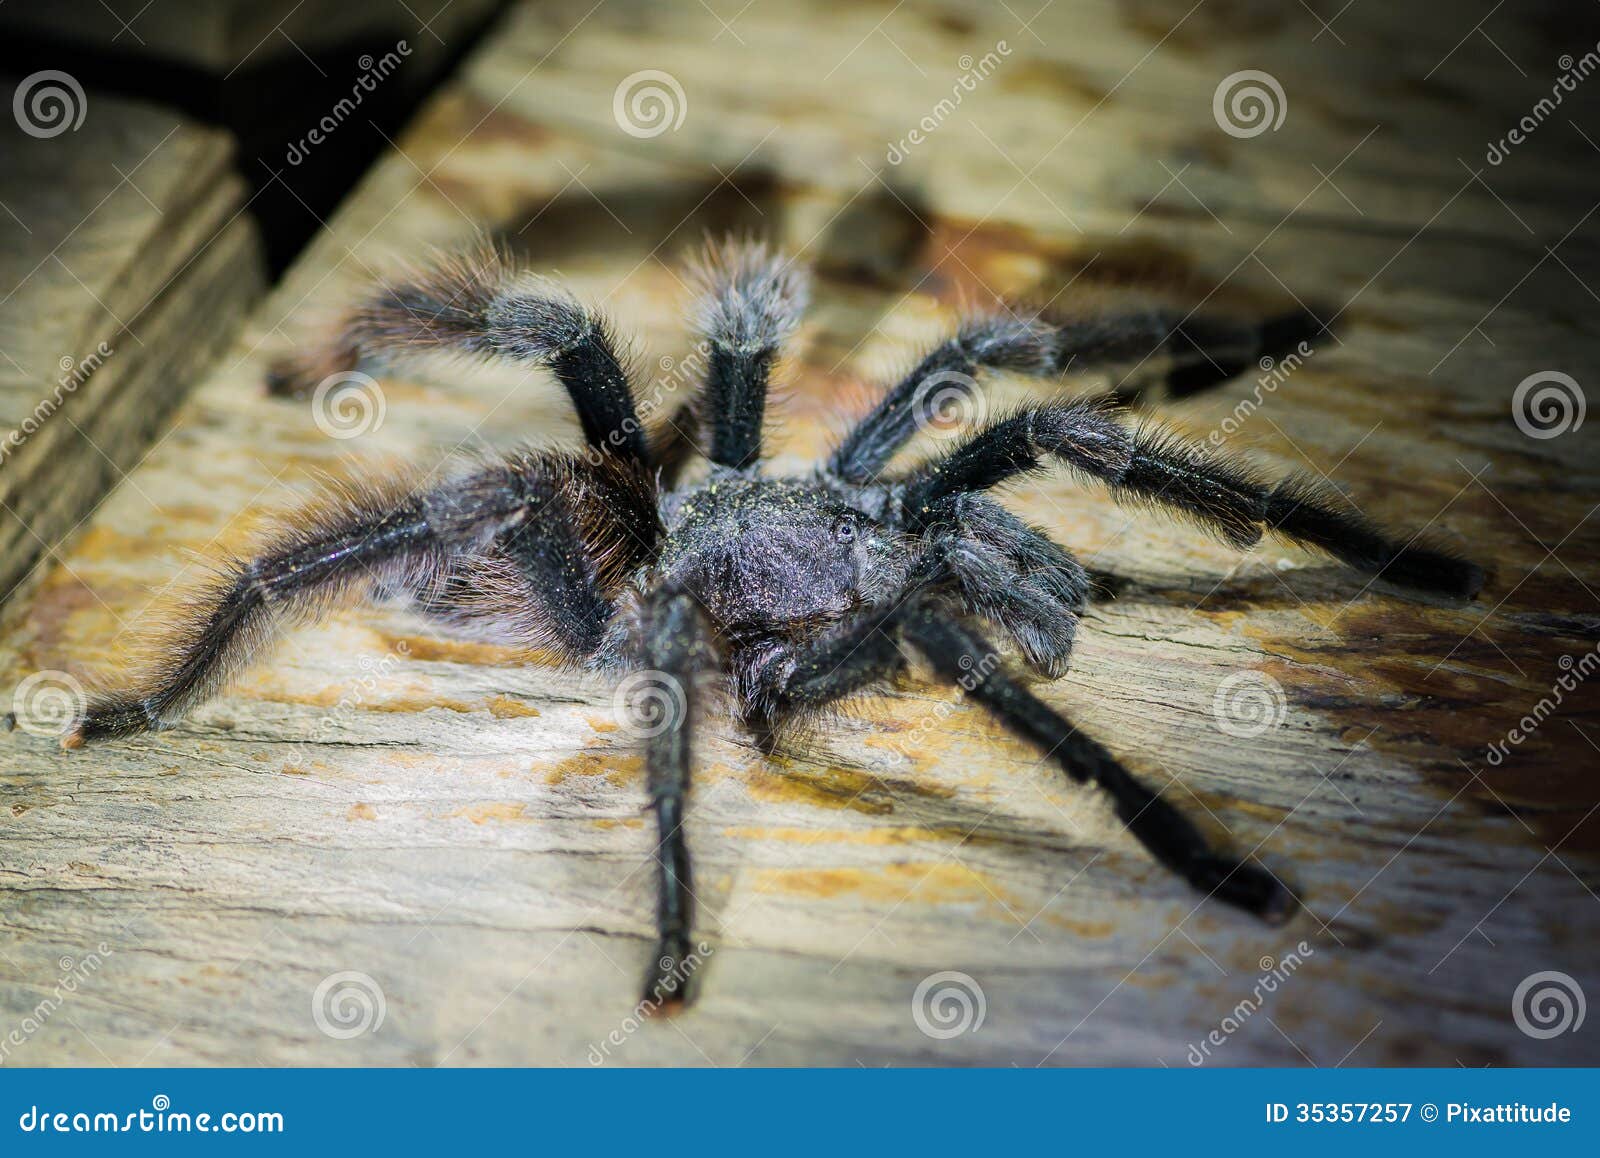 black tarantula in the peruvian amazon jungle at madre de dios p